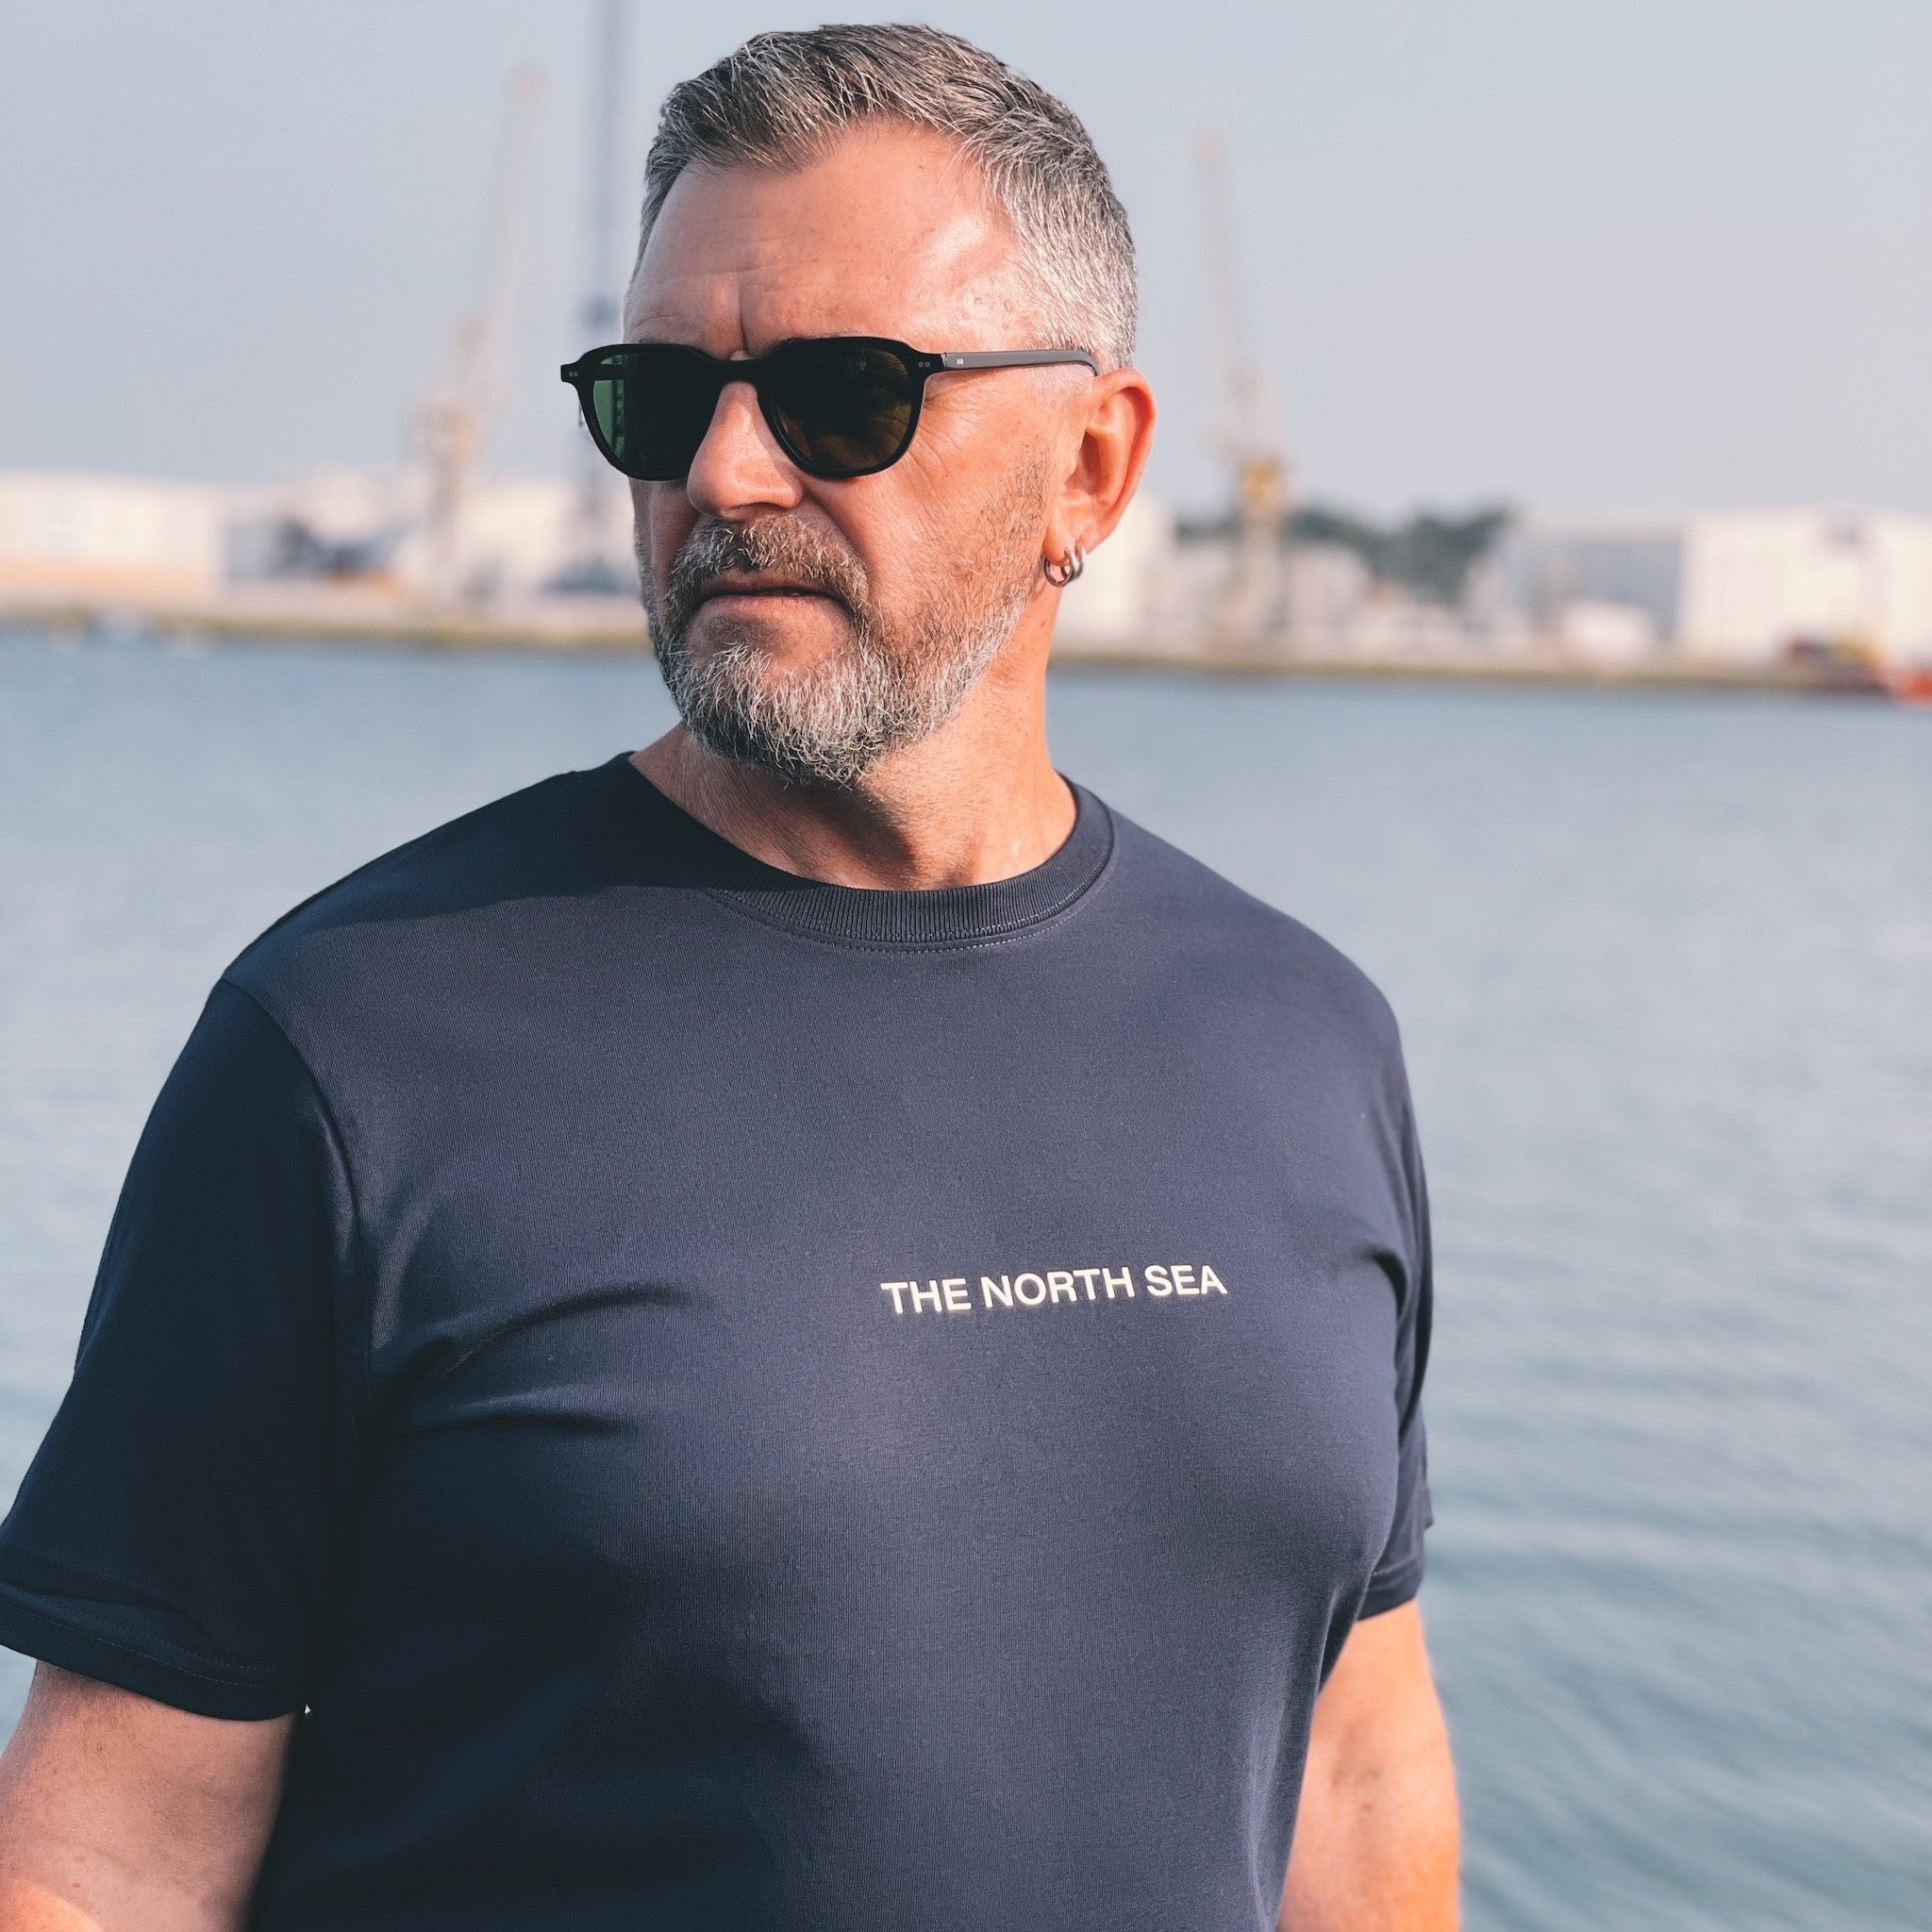 · Worldwide Classic Maritime T-Shirt Nation